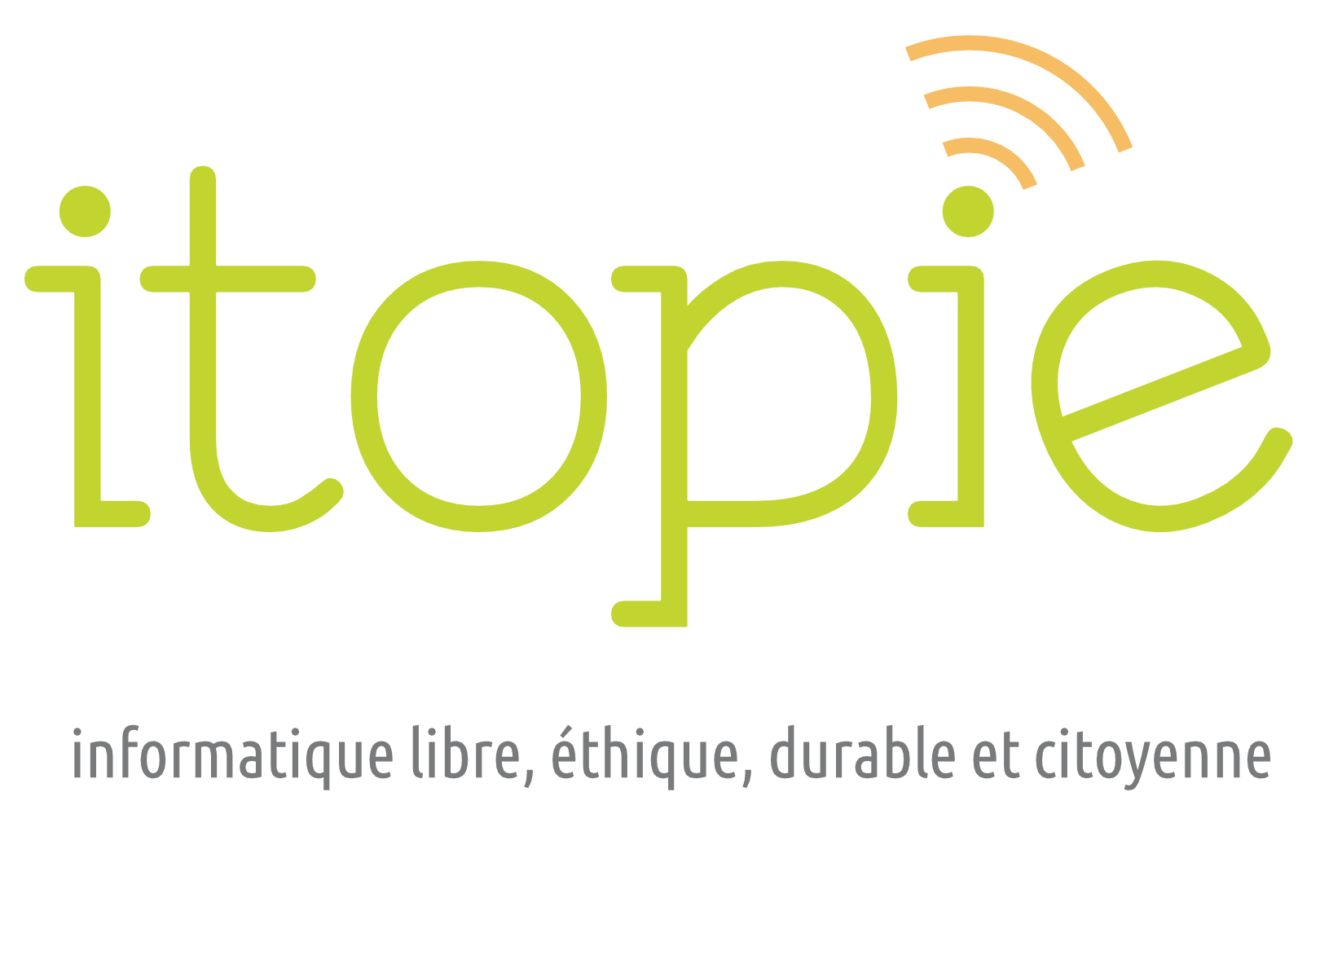 Logo itopie informatique